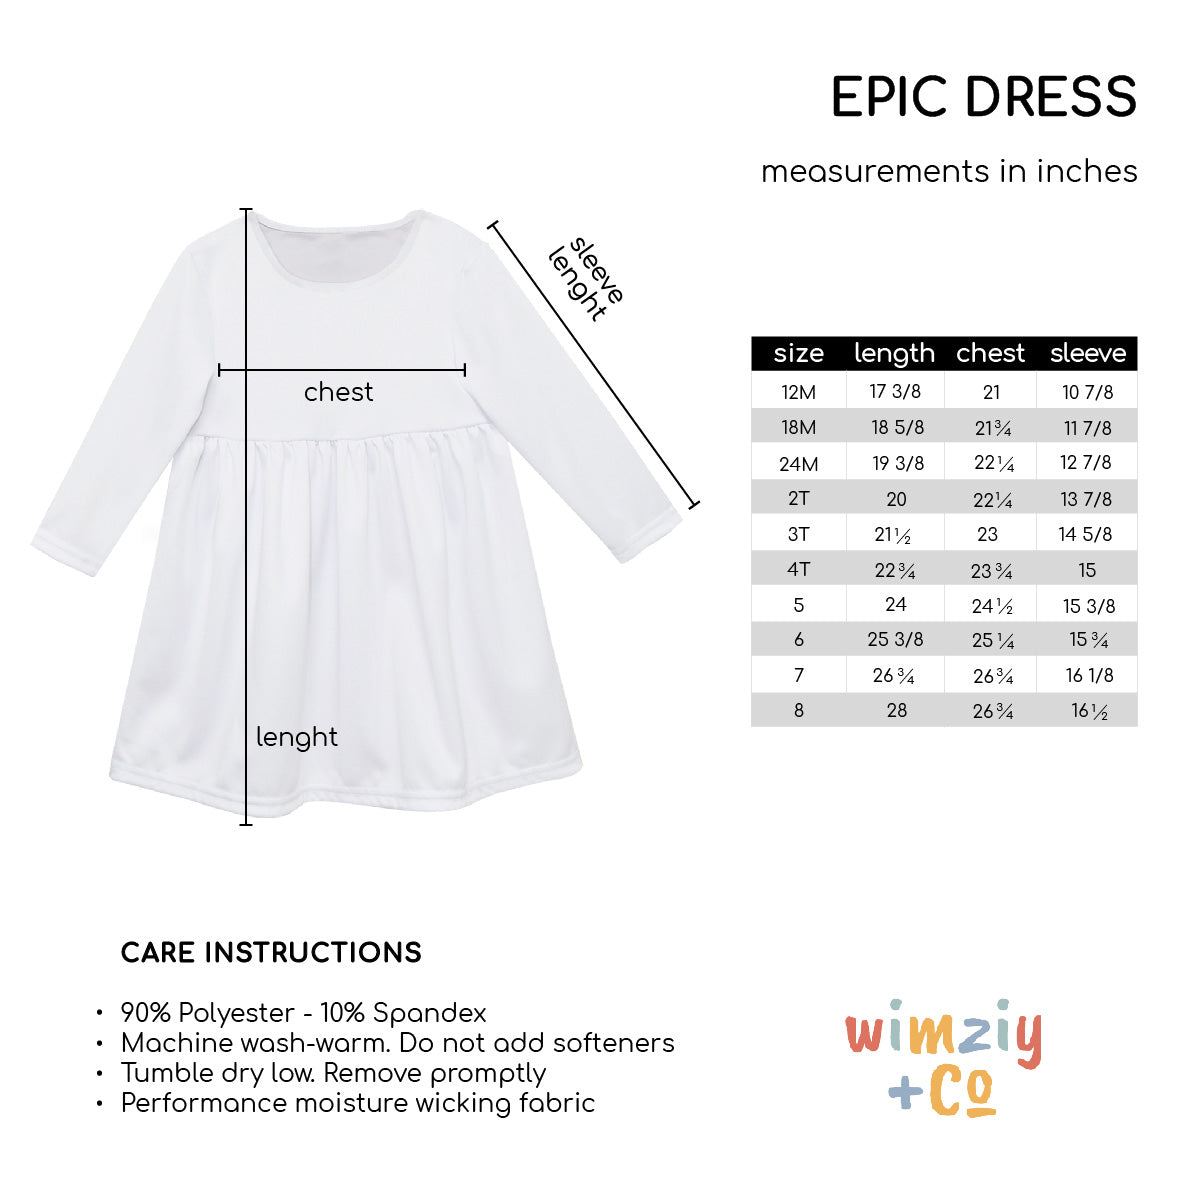 Personalized Monogram Orange and Peach Long Sleeve Epic Dress - Wimziy&Co.